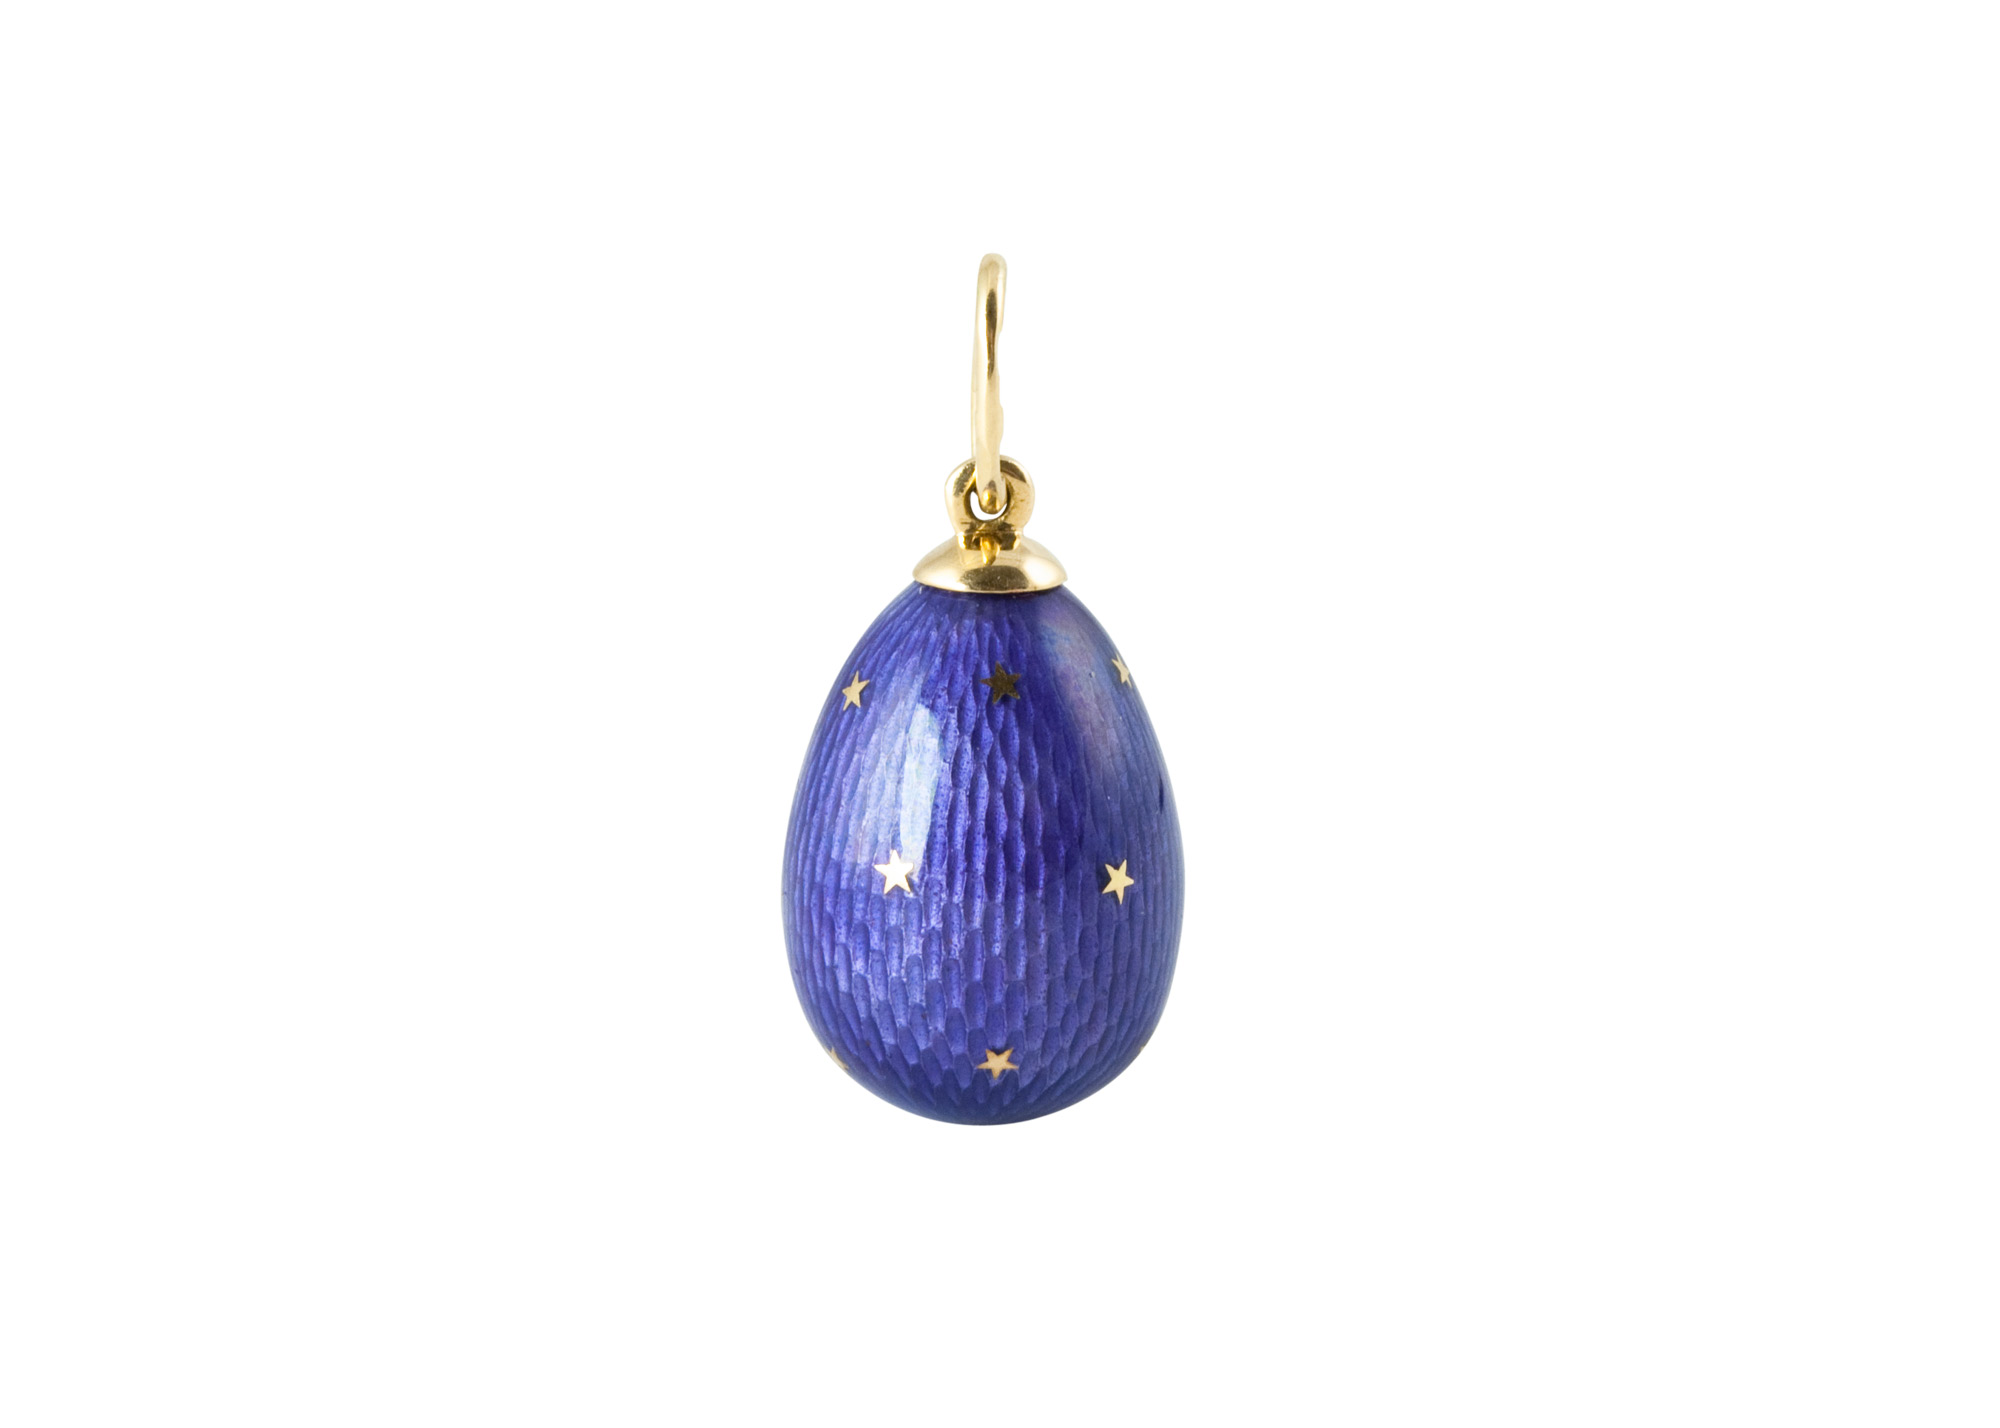 Buy Purple Fleur de Lis Pendant w/ Gold Cap at GoldenCockerel.com